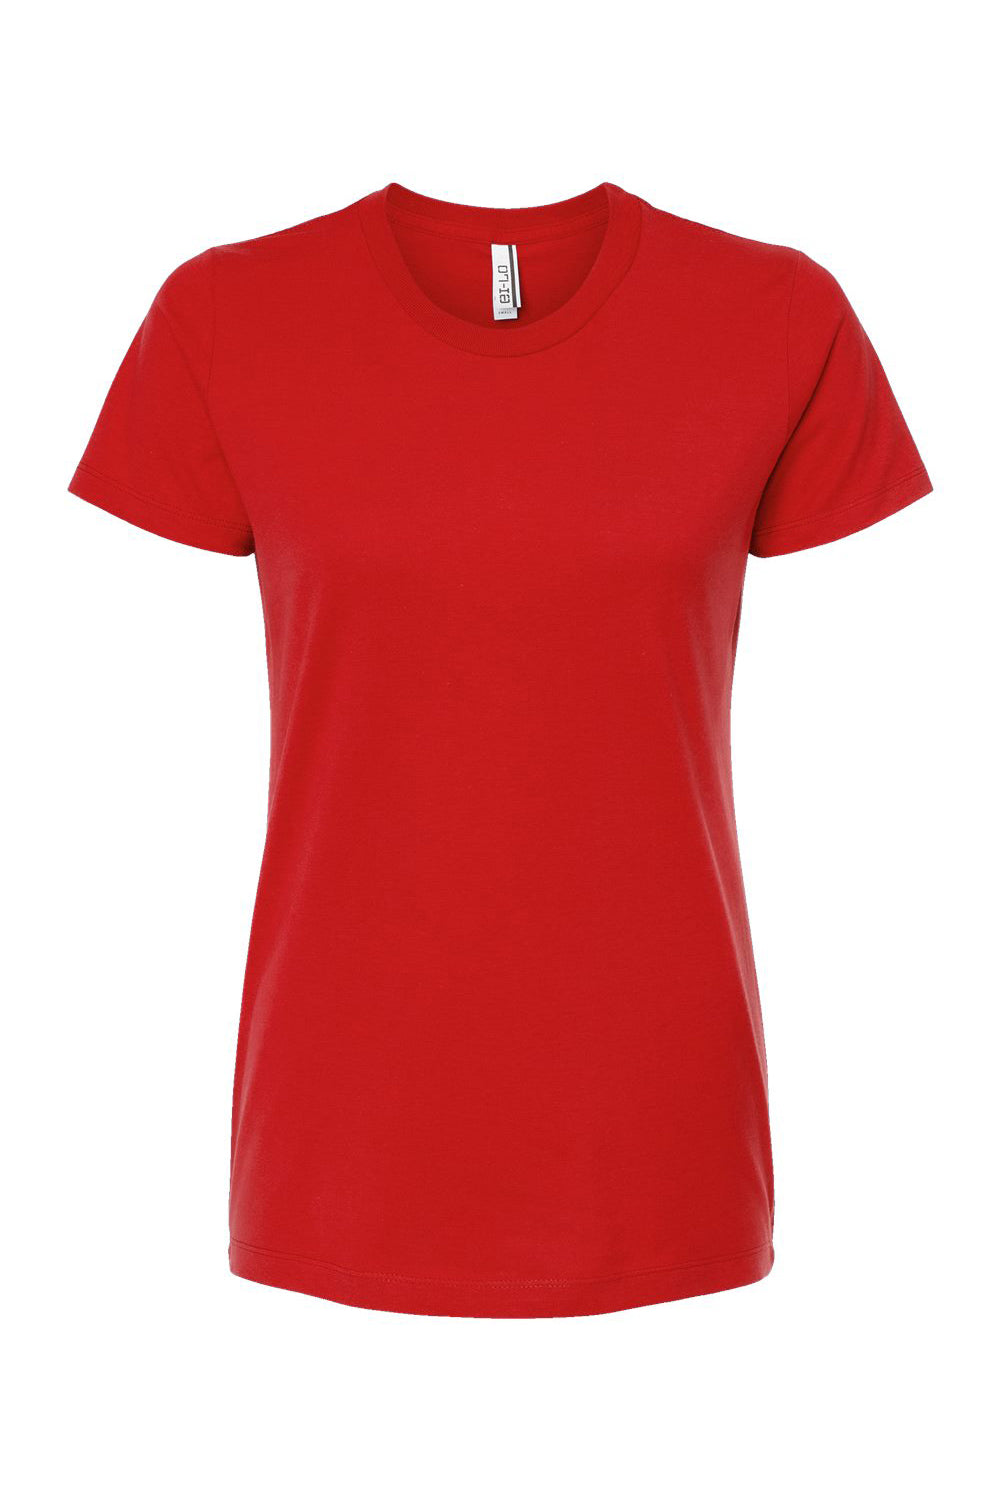 Tultex 516 Womens Premium Short Sleeve Crewneck T-Shirt Red Flat Front